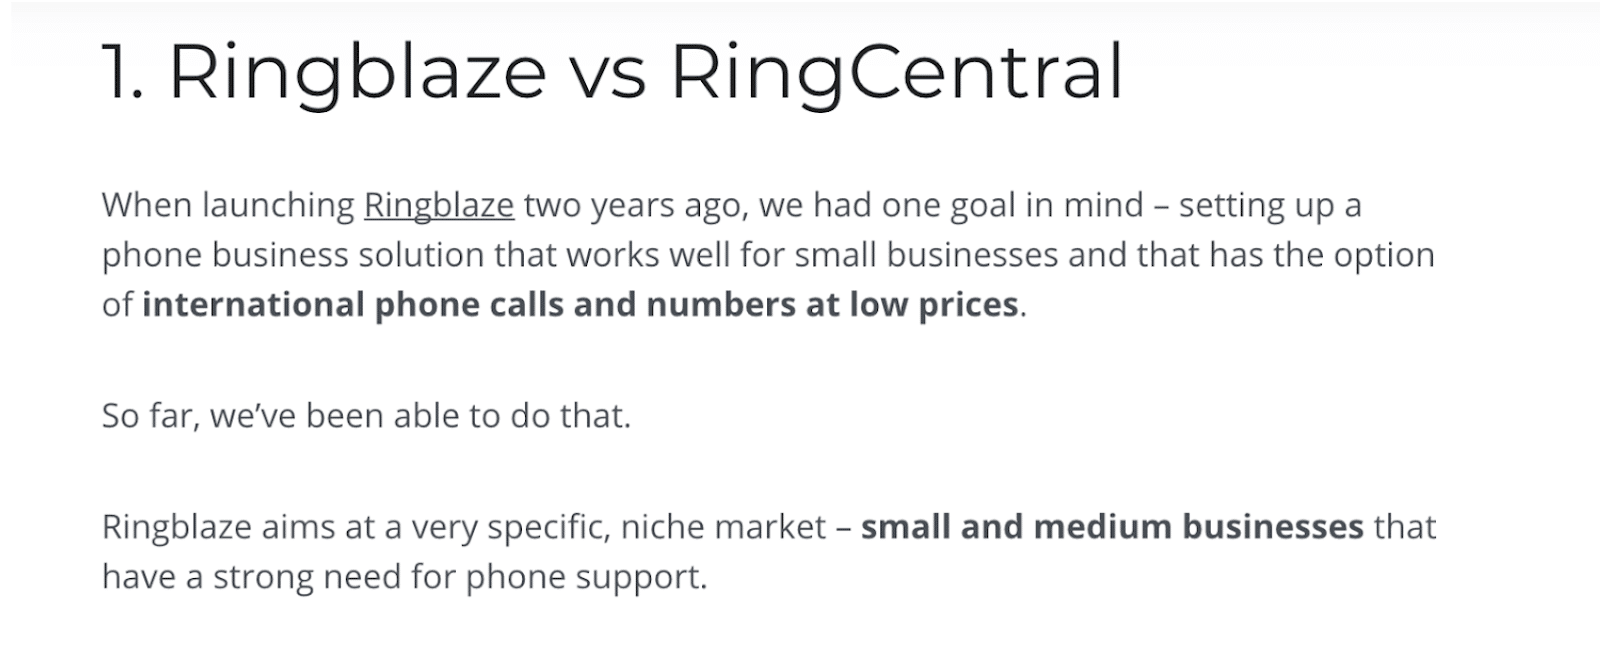 Comparison of SaaS companies Ringblaze vs RingCentral